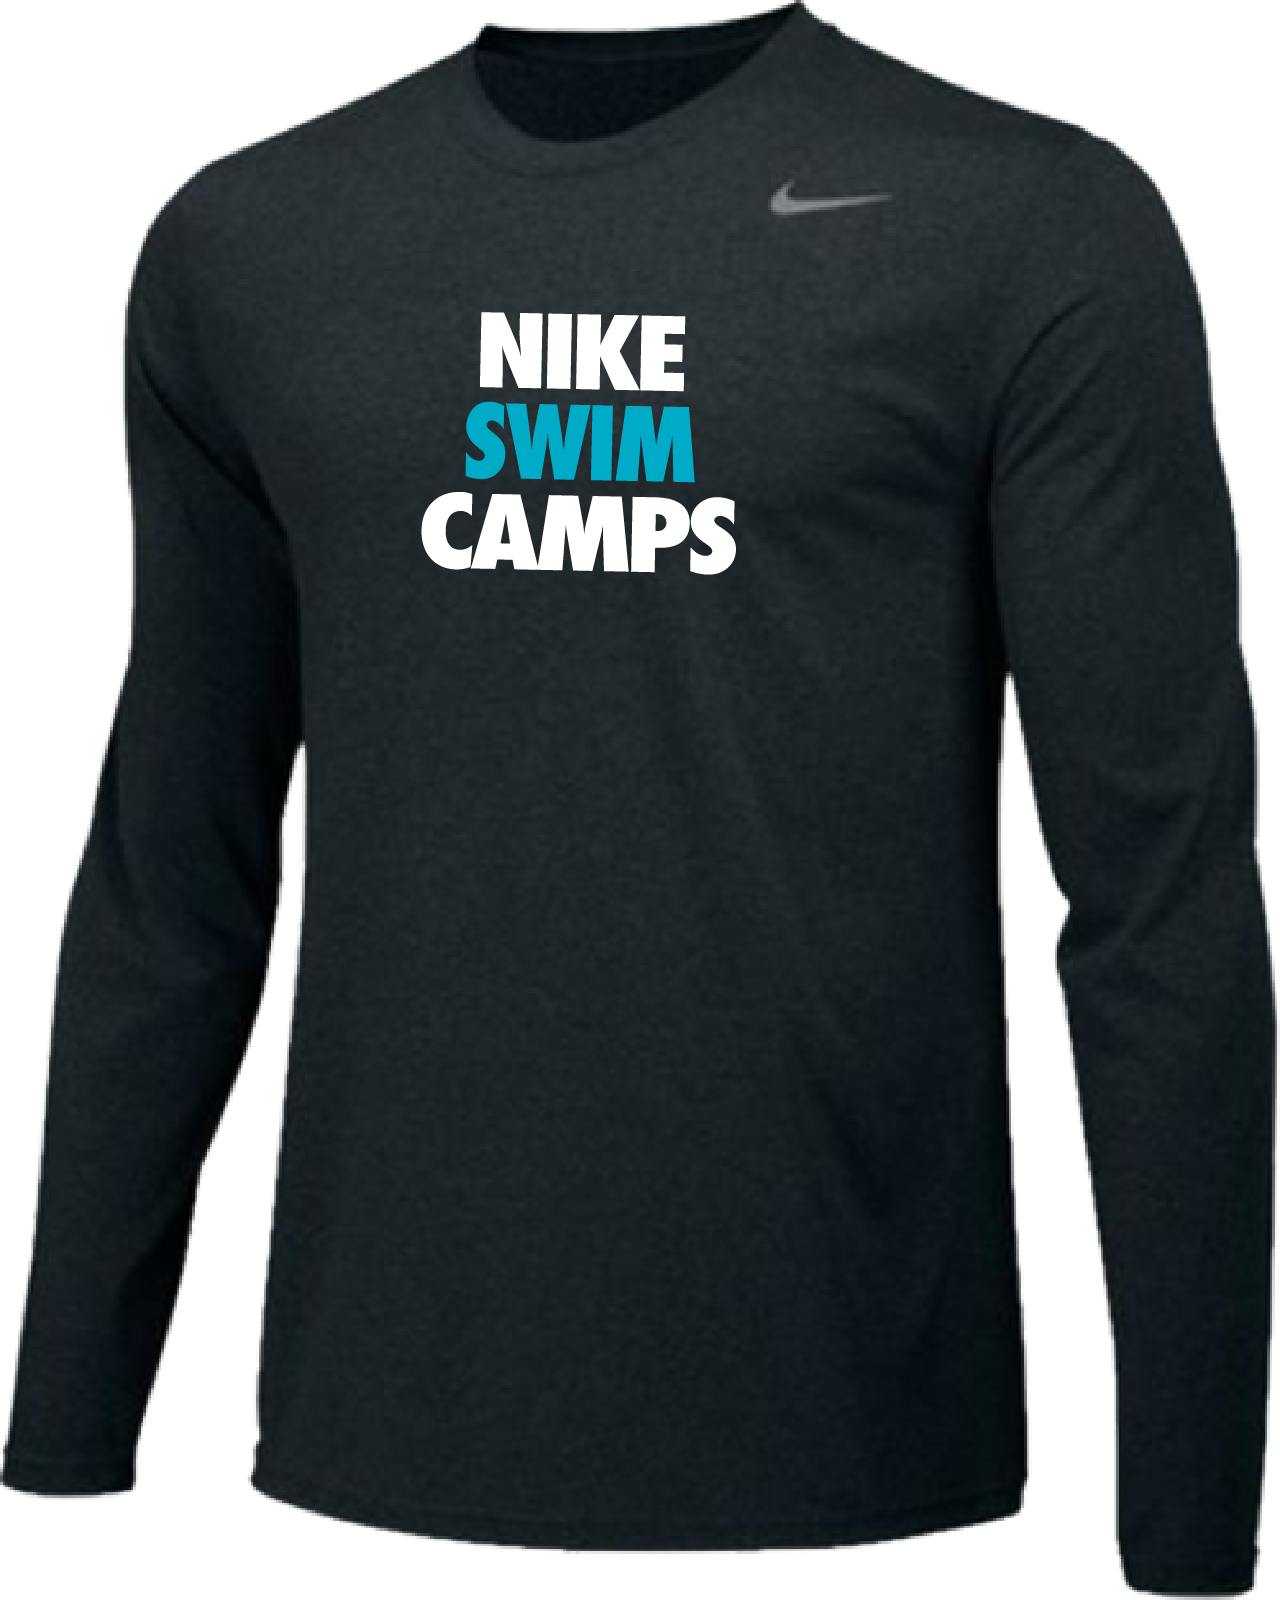 Swim – US Sports Camps